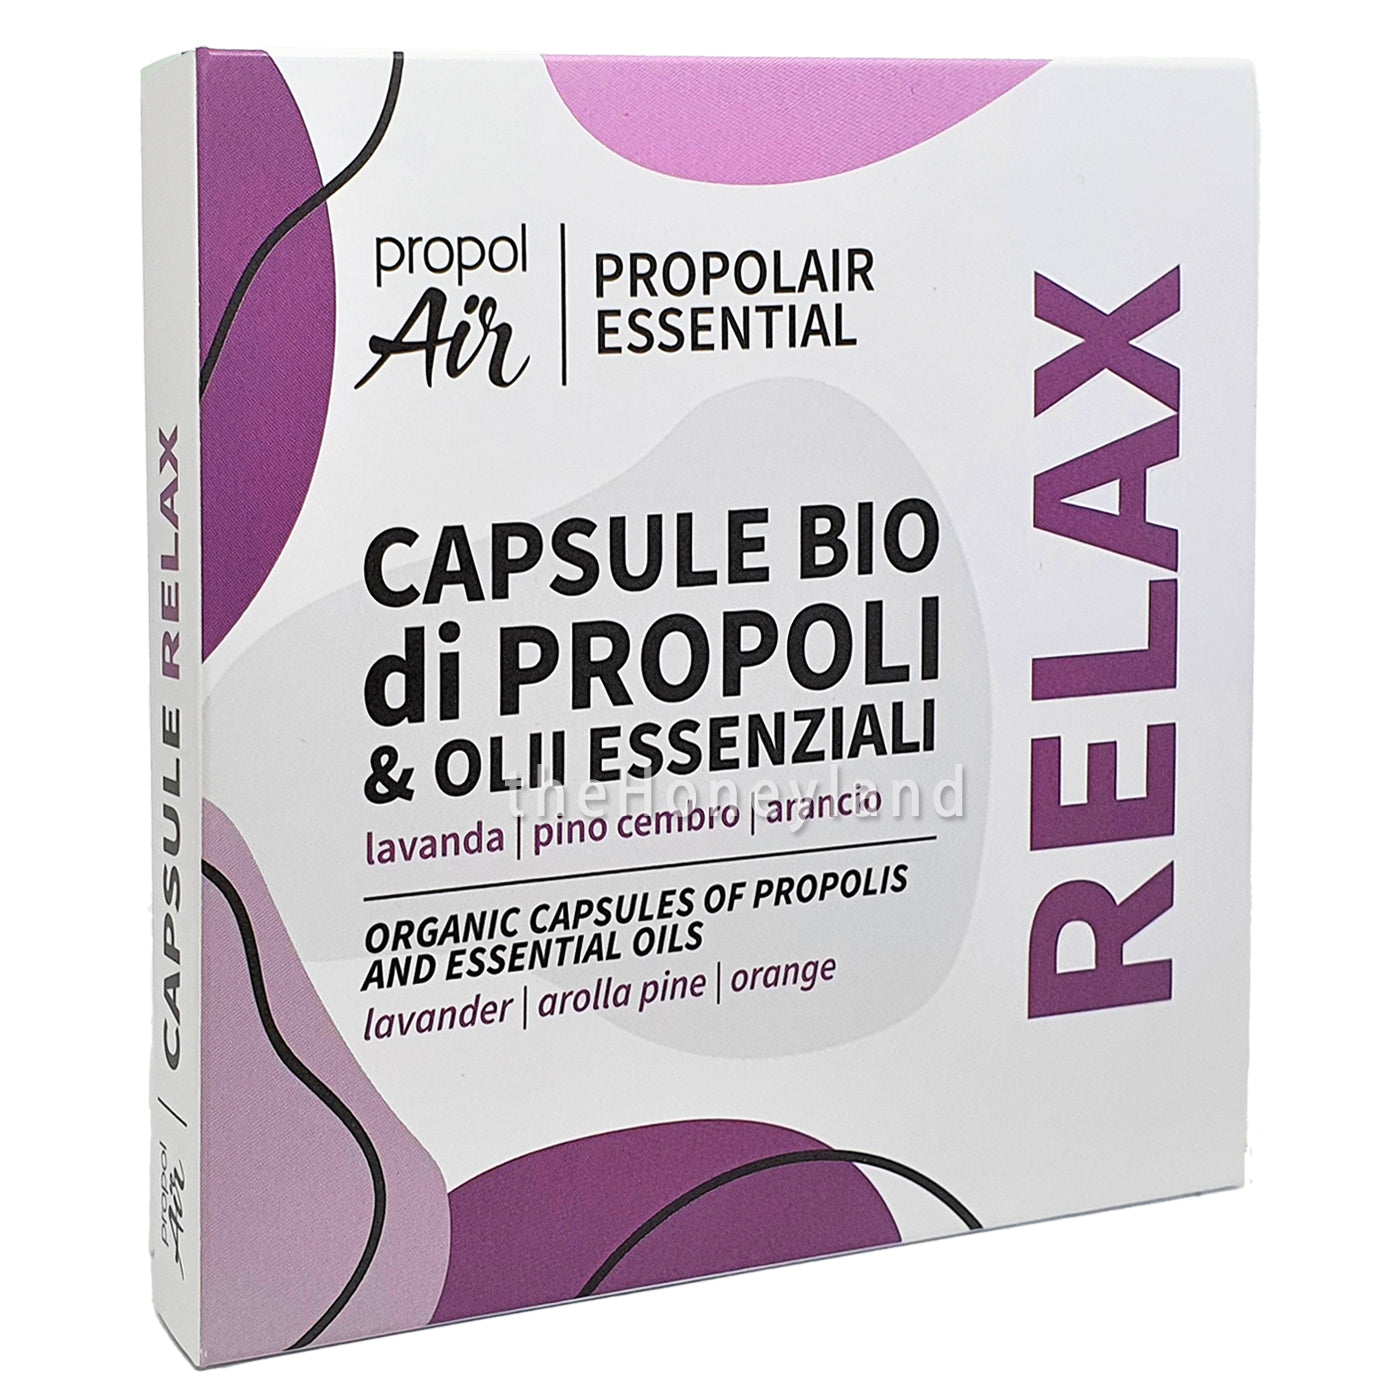 Bio Relax - Propolis capsules with lavender, stone pine and orange essential oils